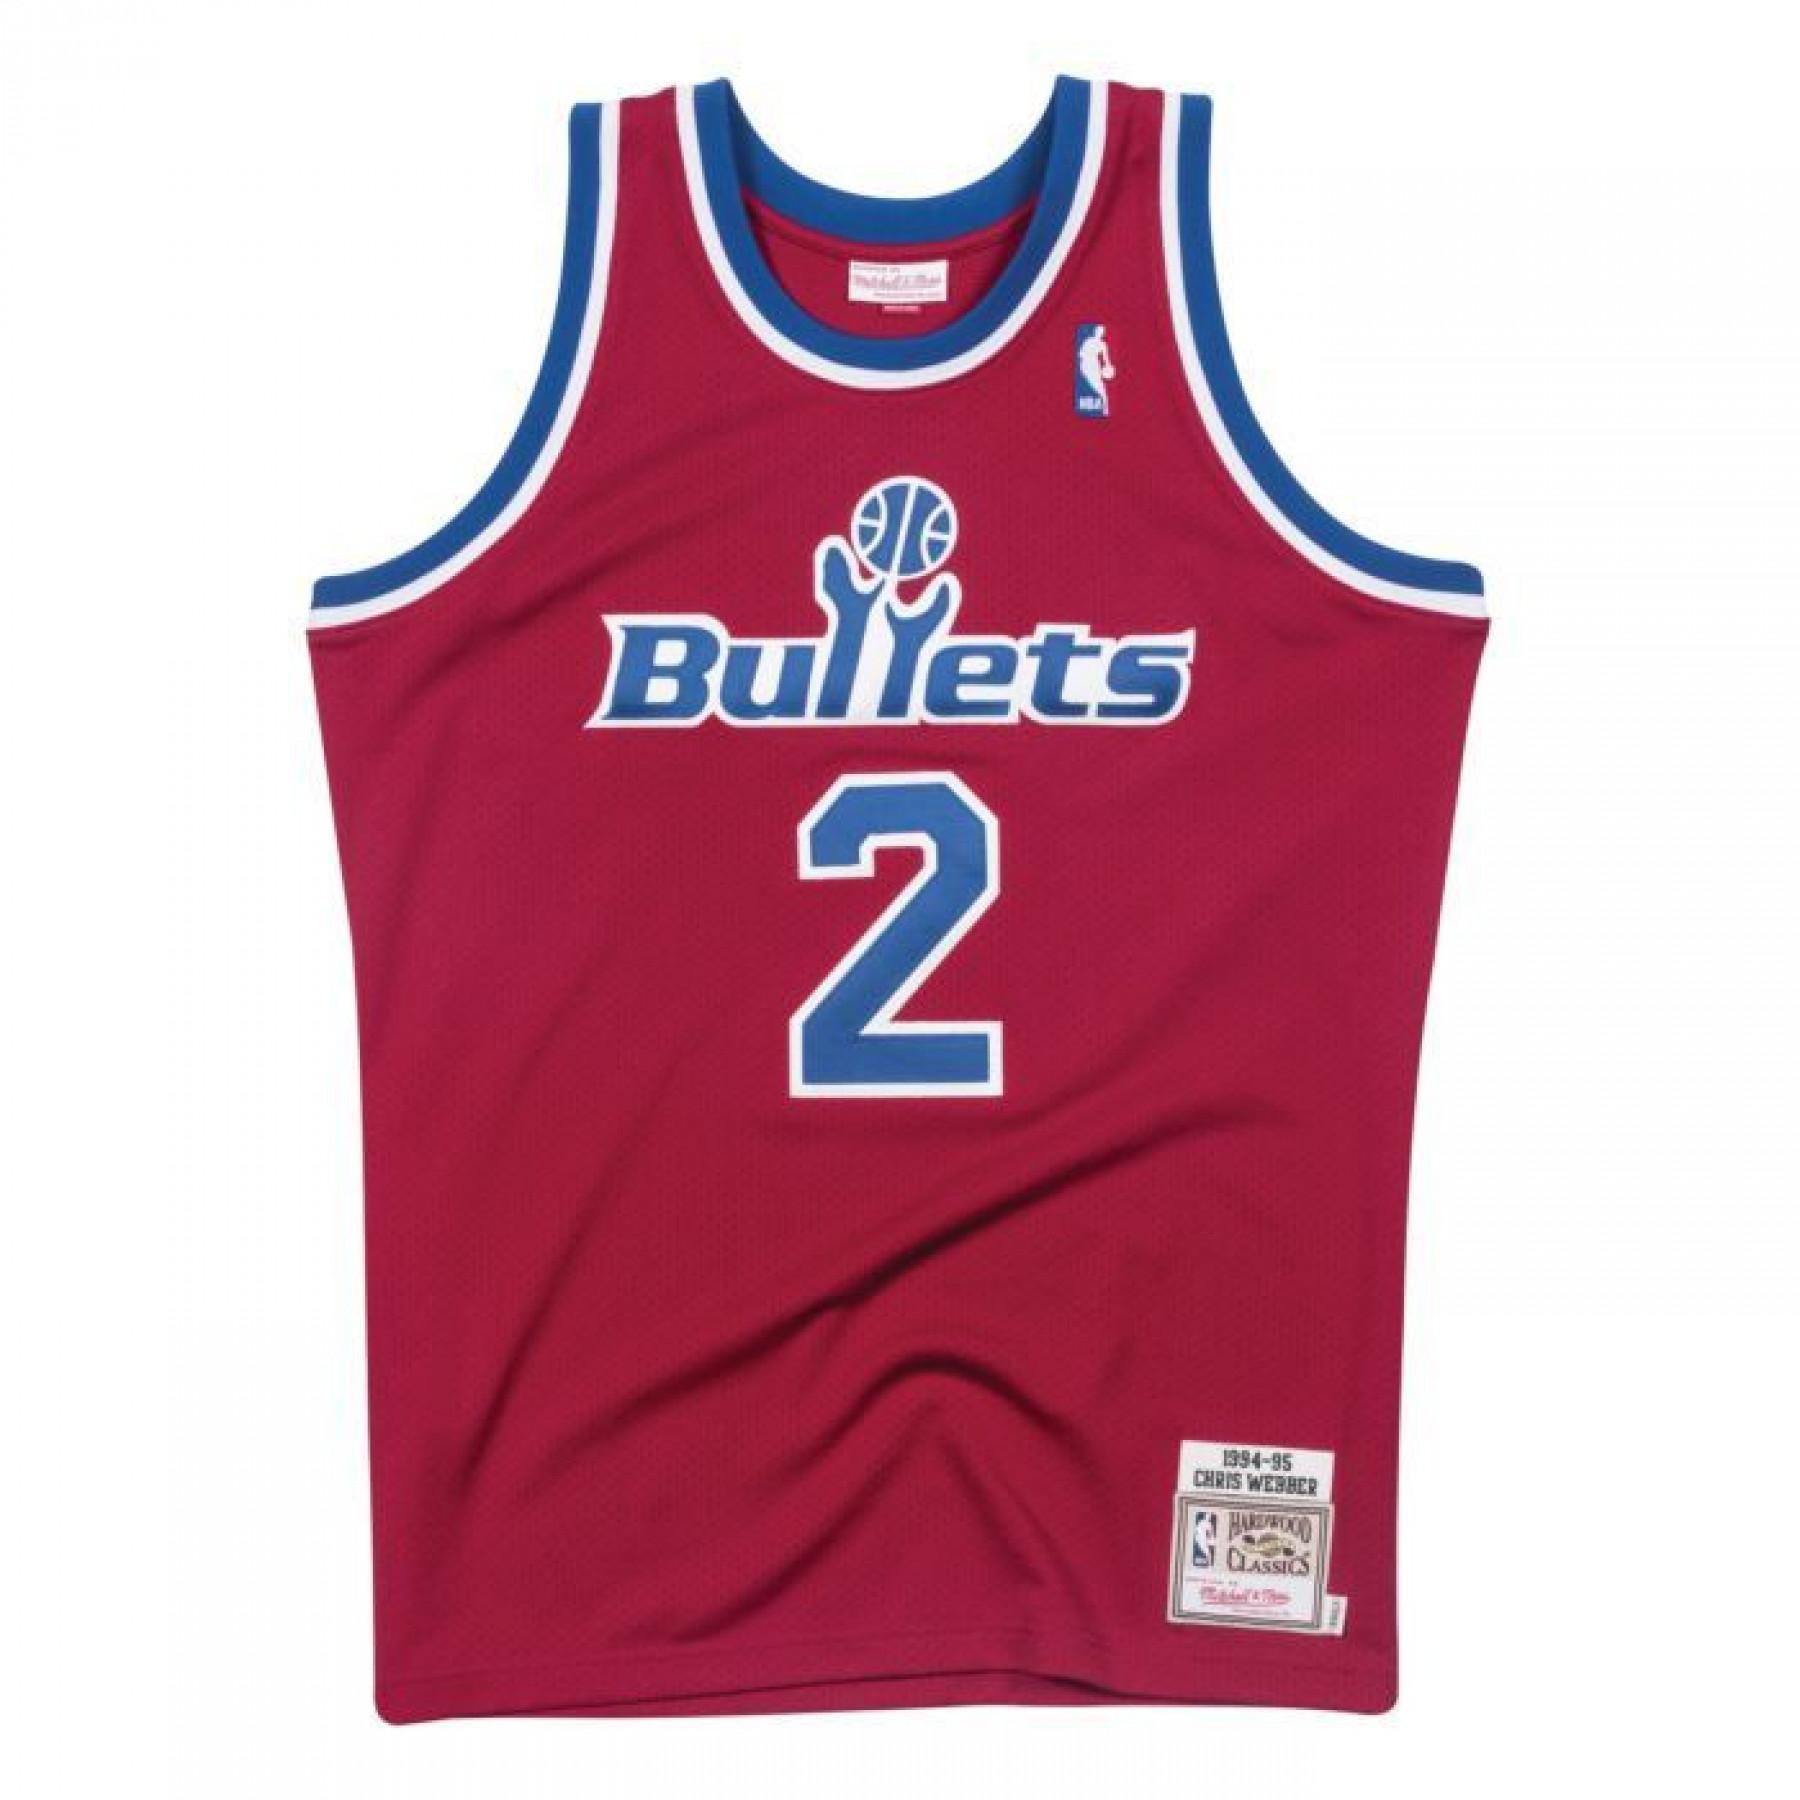 Camisola autêntico Washington Bullets Chris Webber 1994-95